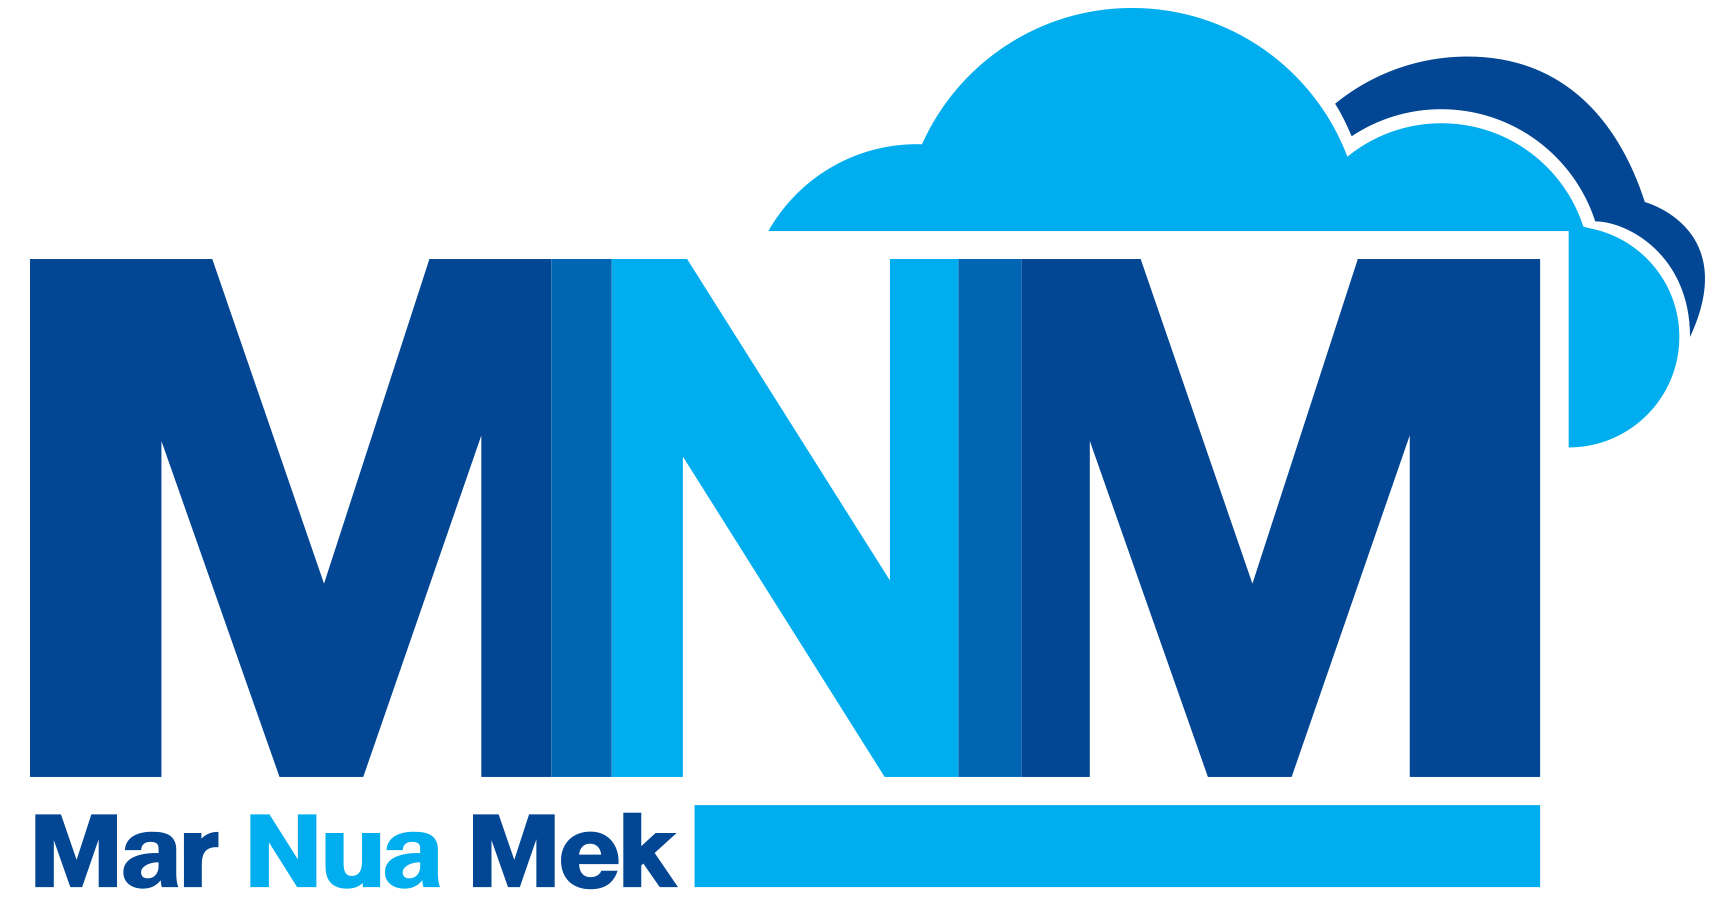 Mar Nua Mek – มาเหนือเมฆ